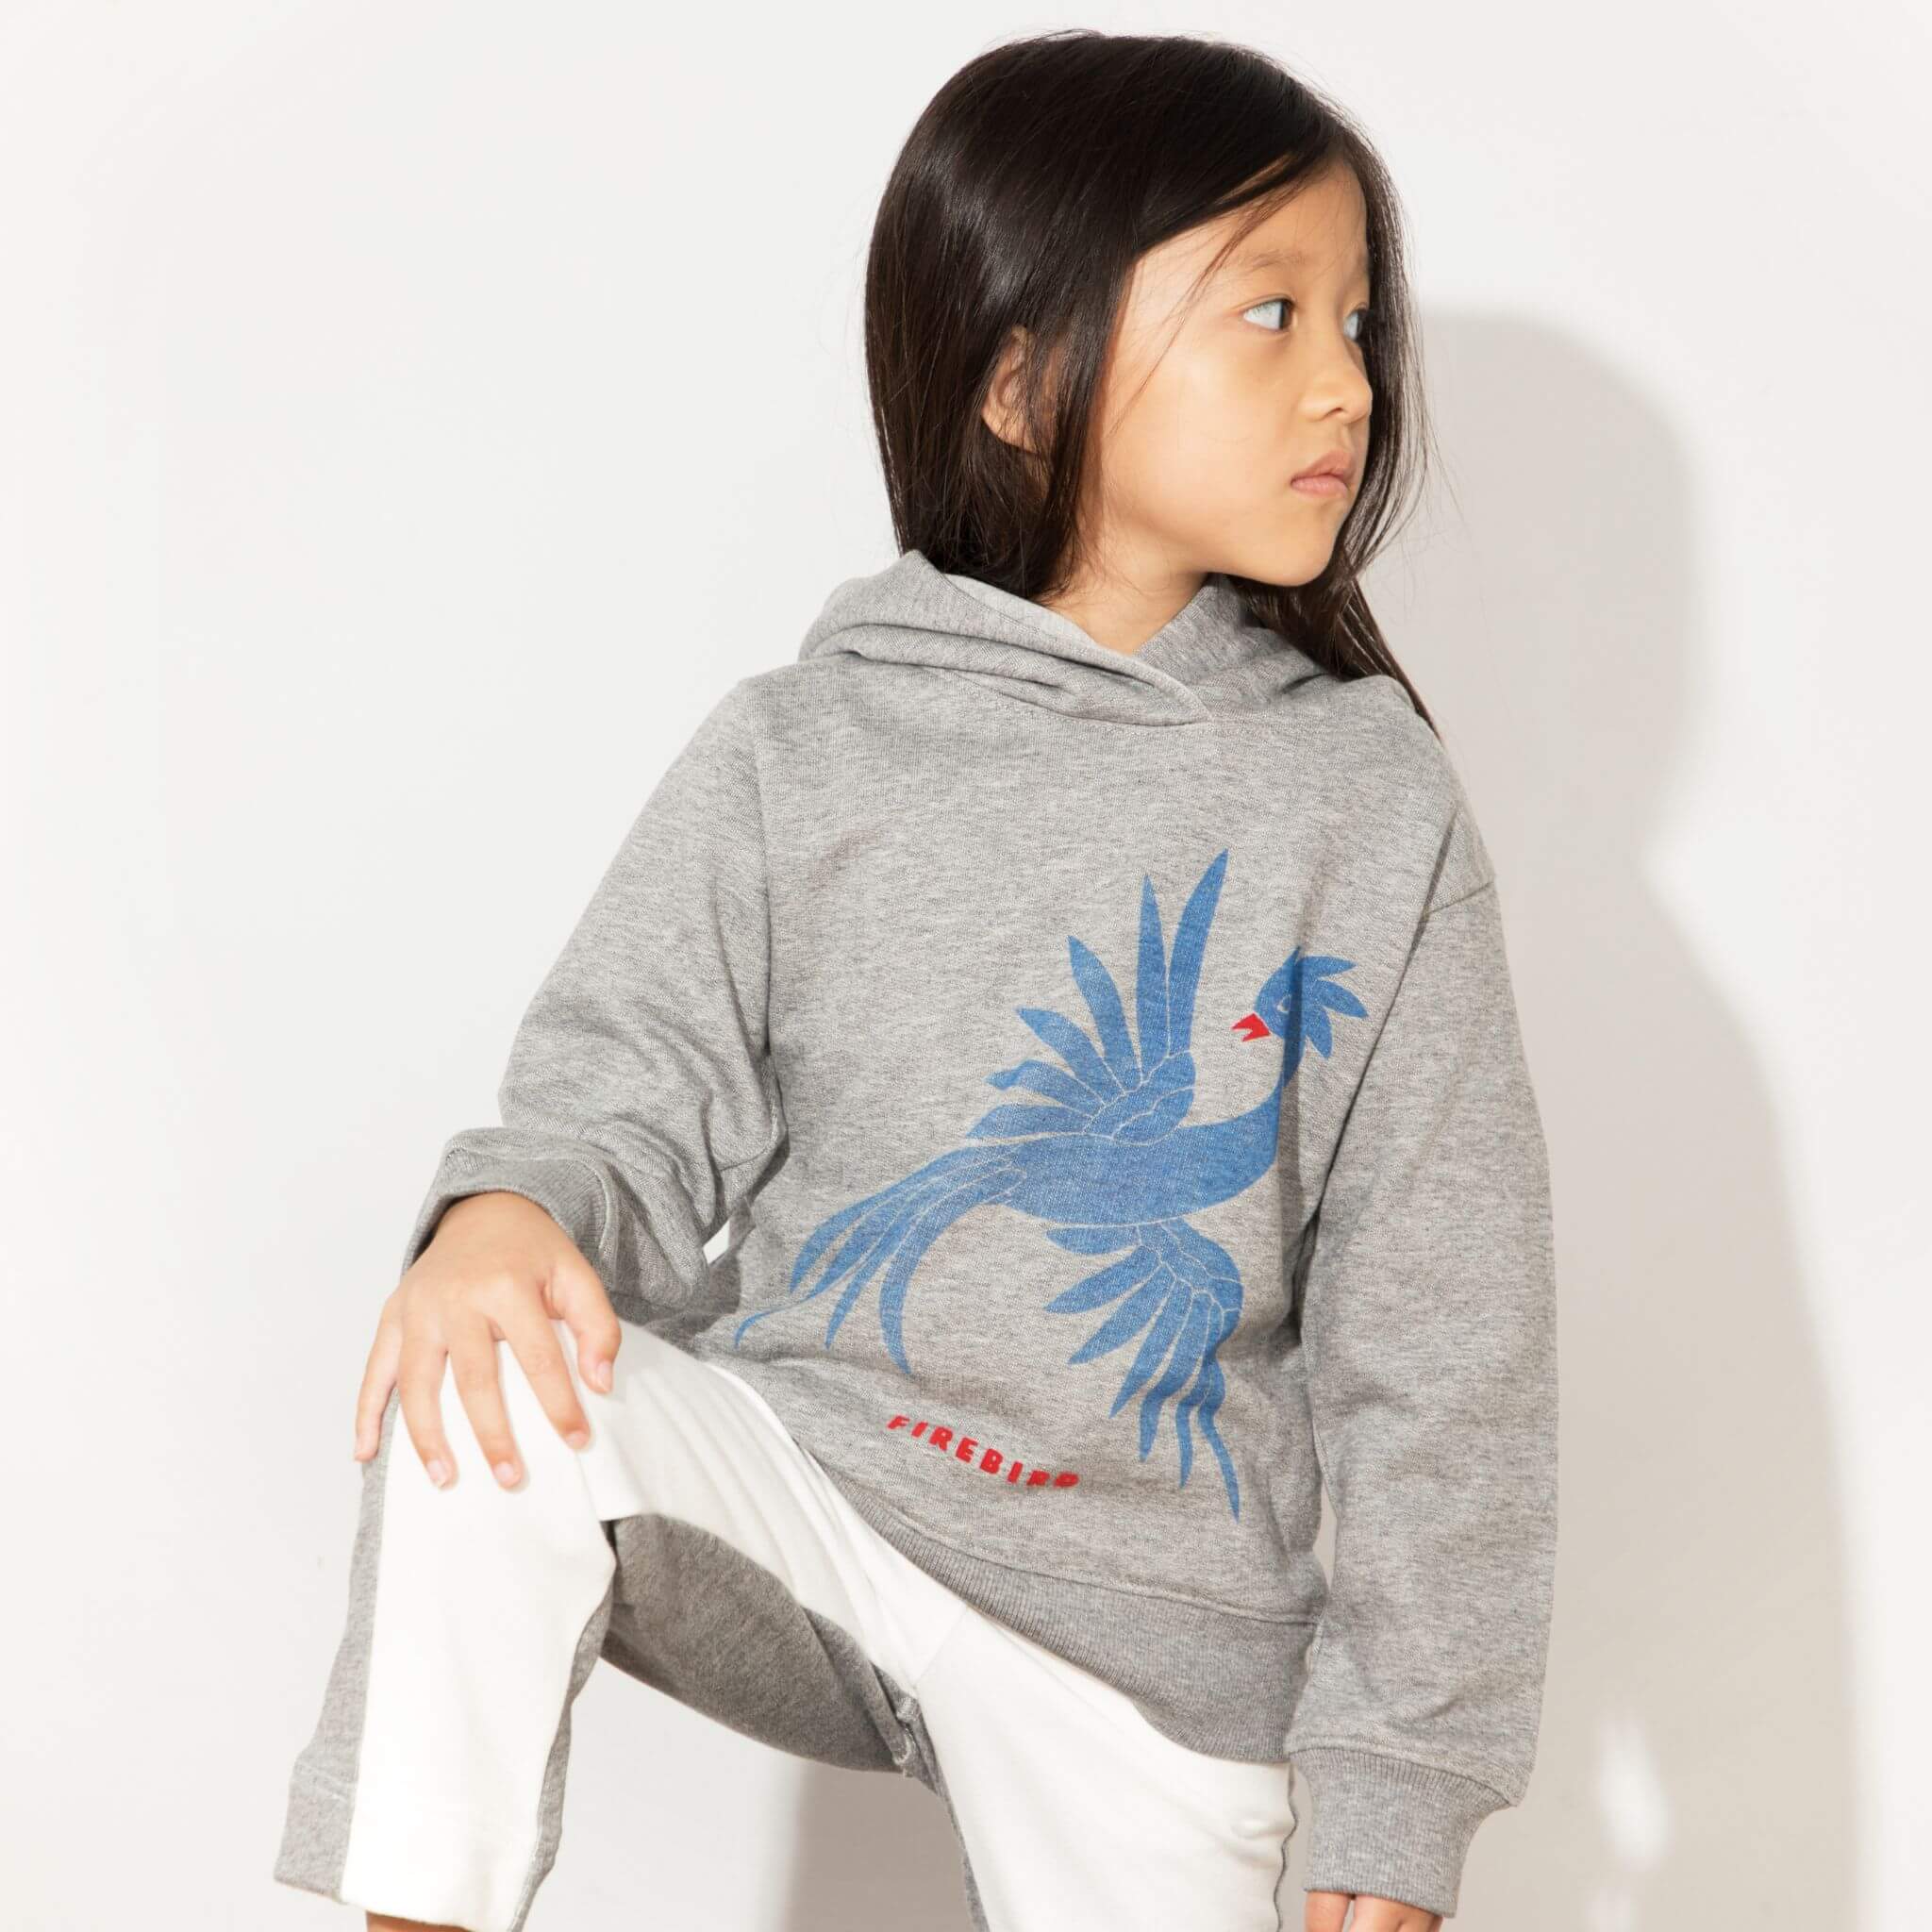 Kids hoodies. 100% organic Peruvian cotton. Super soft and comfortable. Firebird graphic hoodie for cool kids. Unisex.